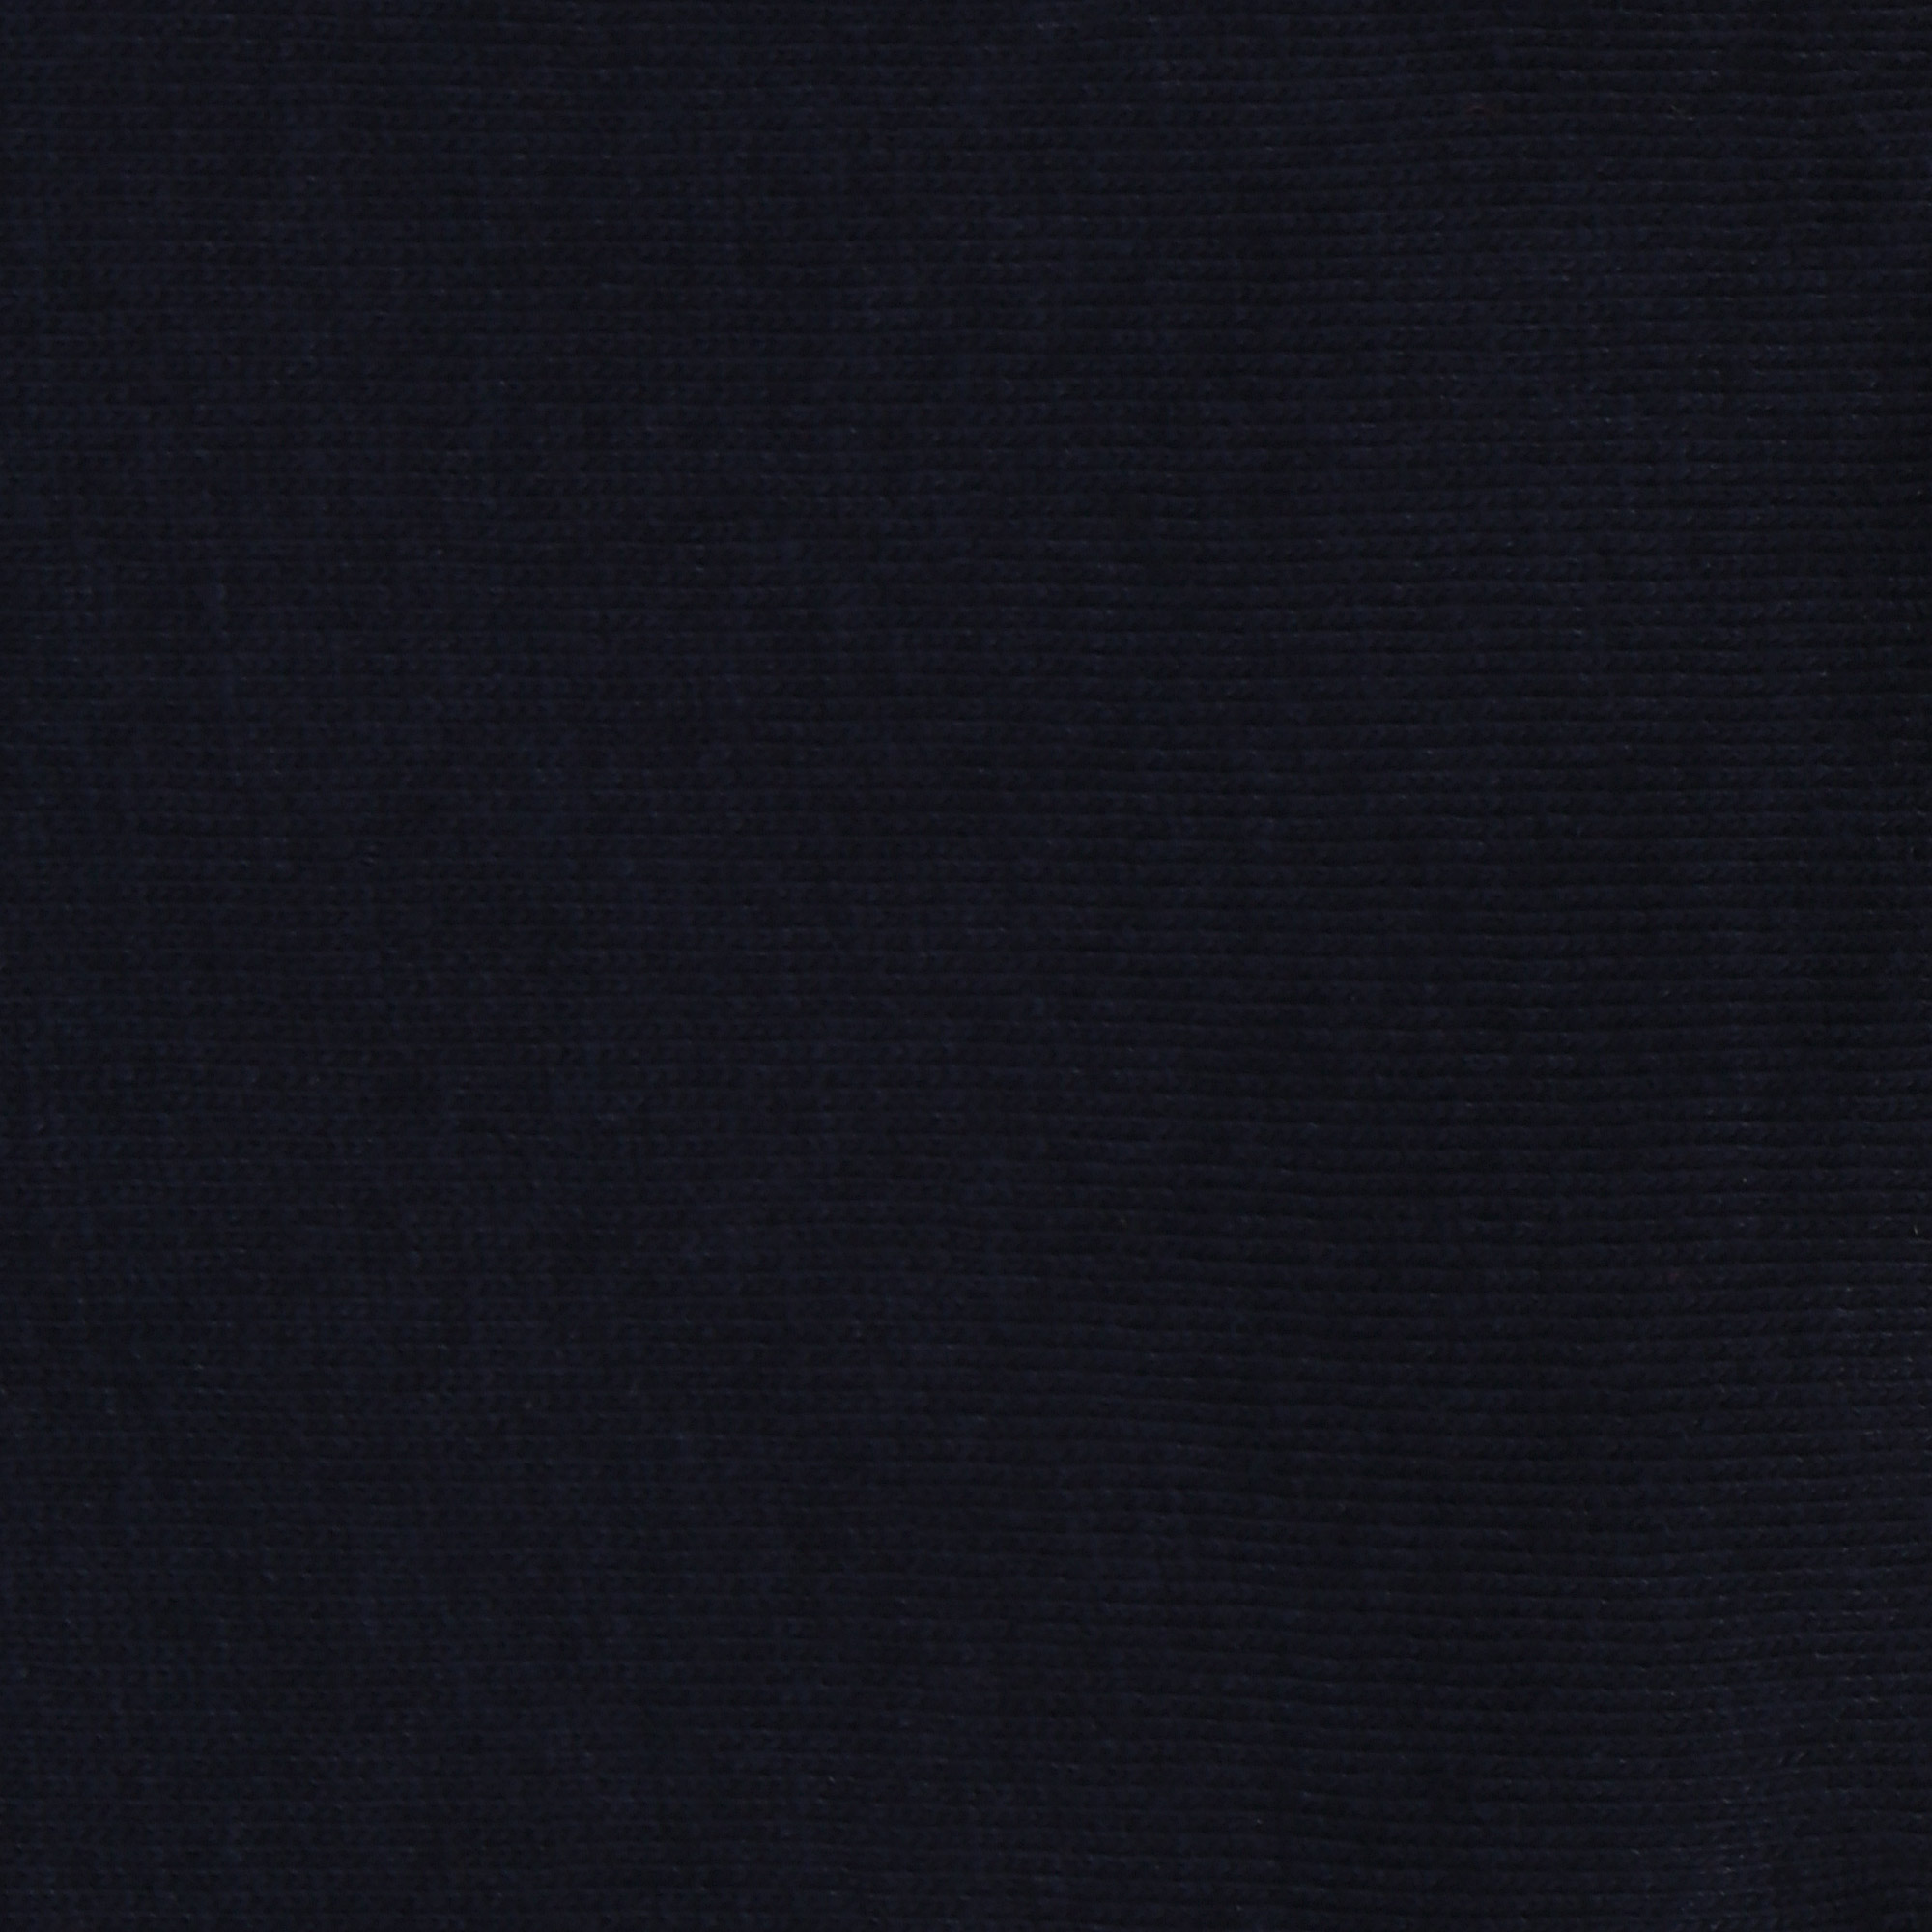 Футболка мужская M-1 Promo темно-синяя с коротким рукавом M, цвет синий, размер M - фото 3